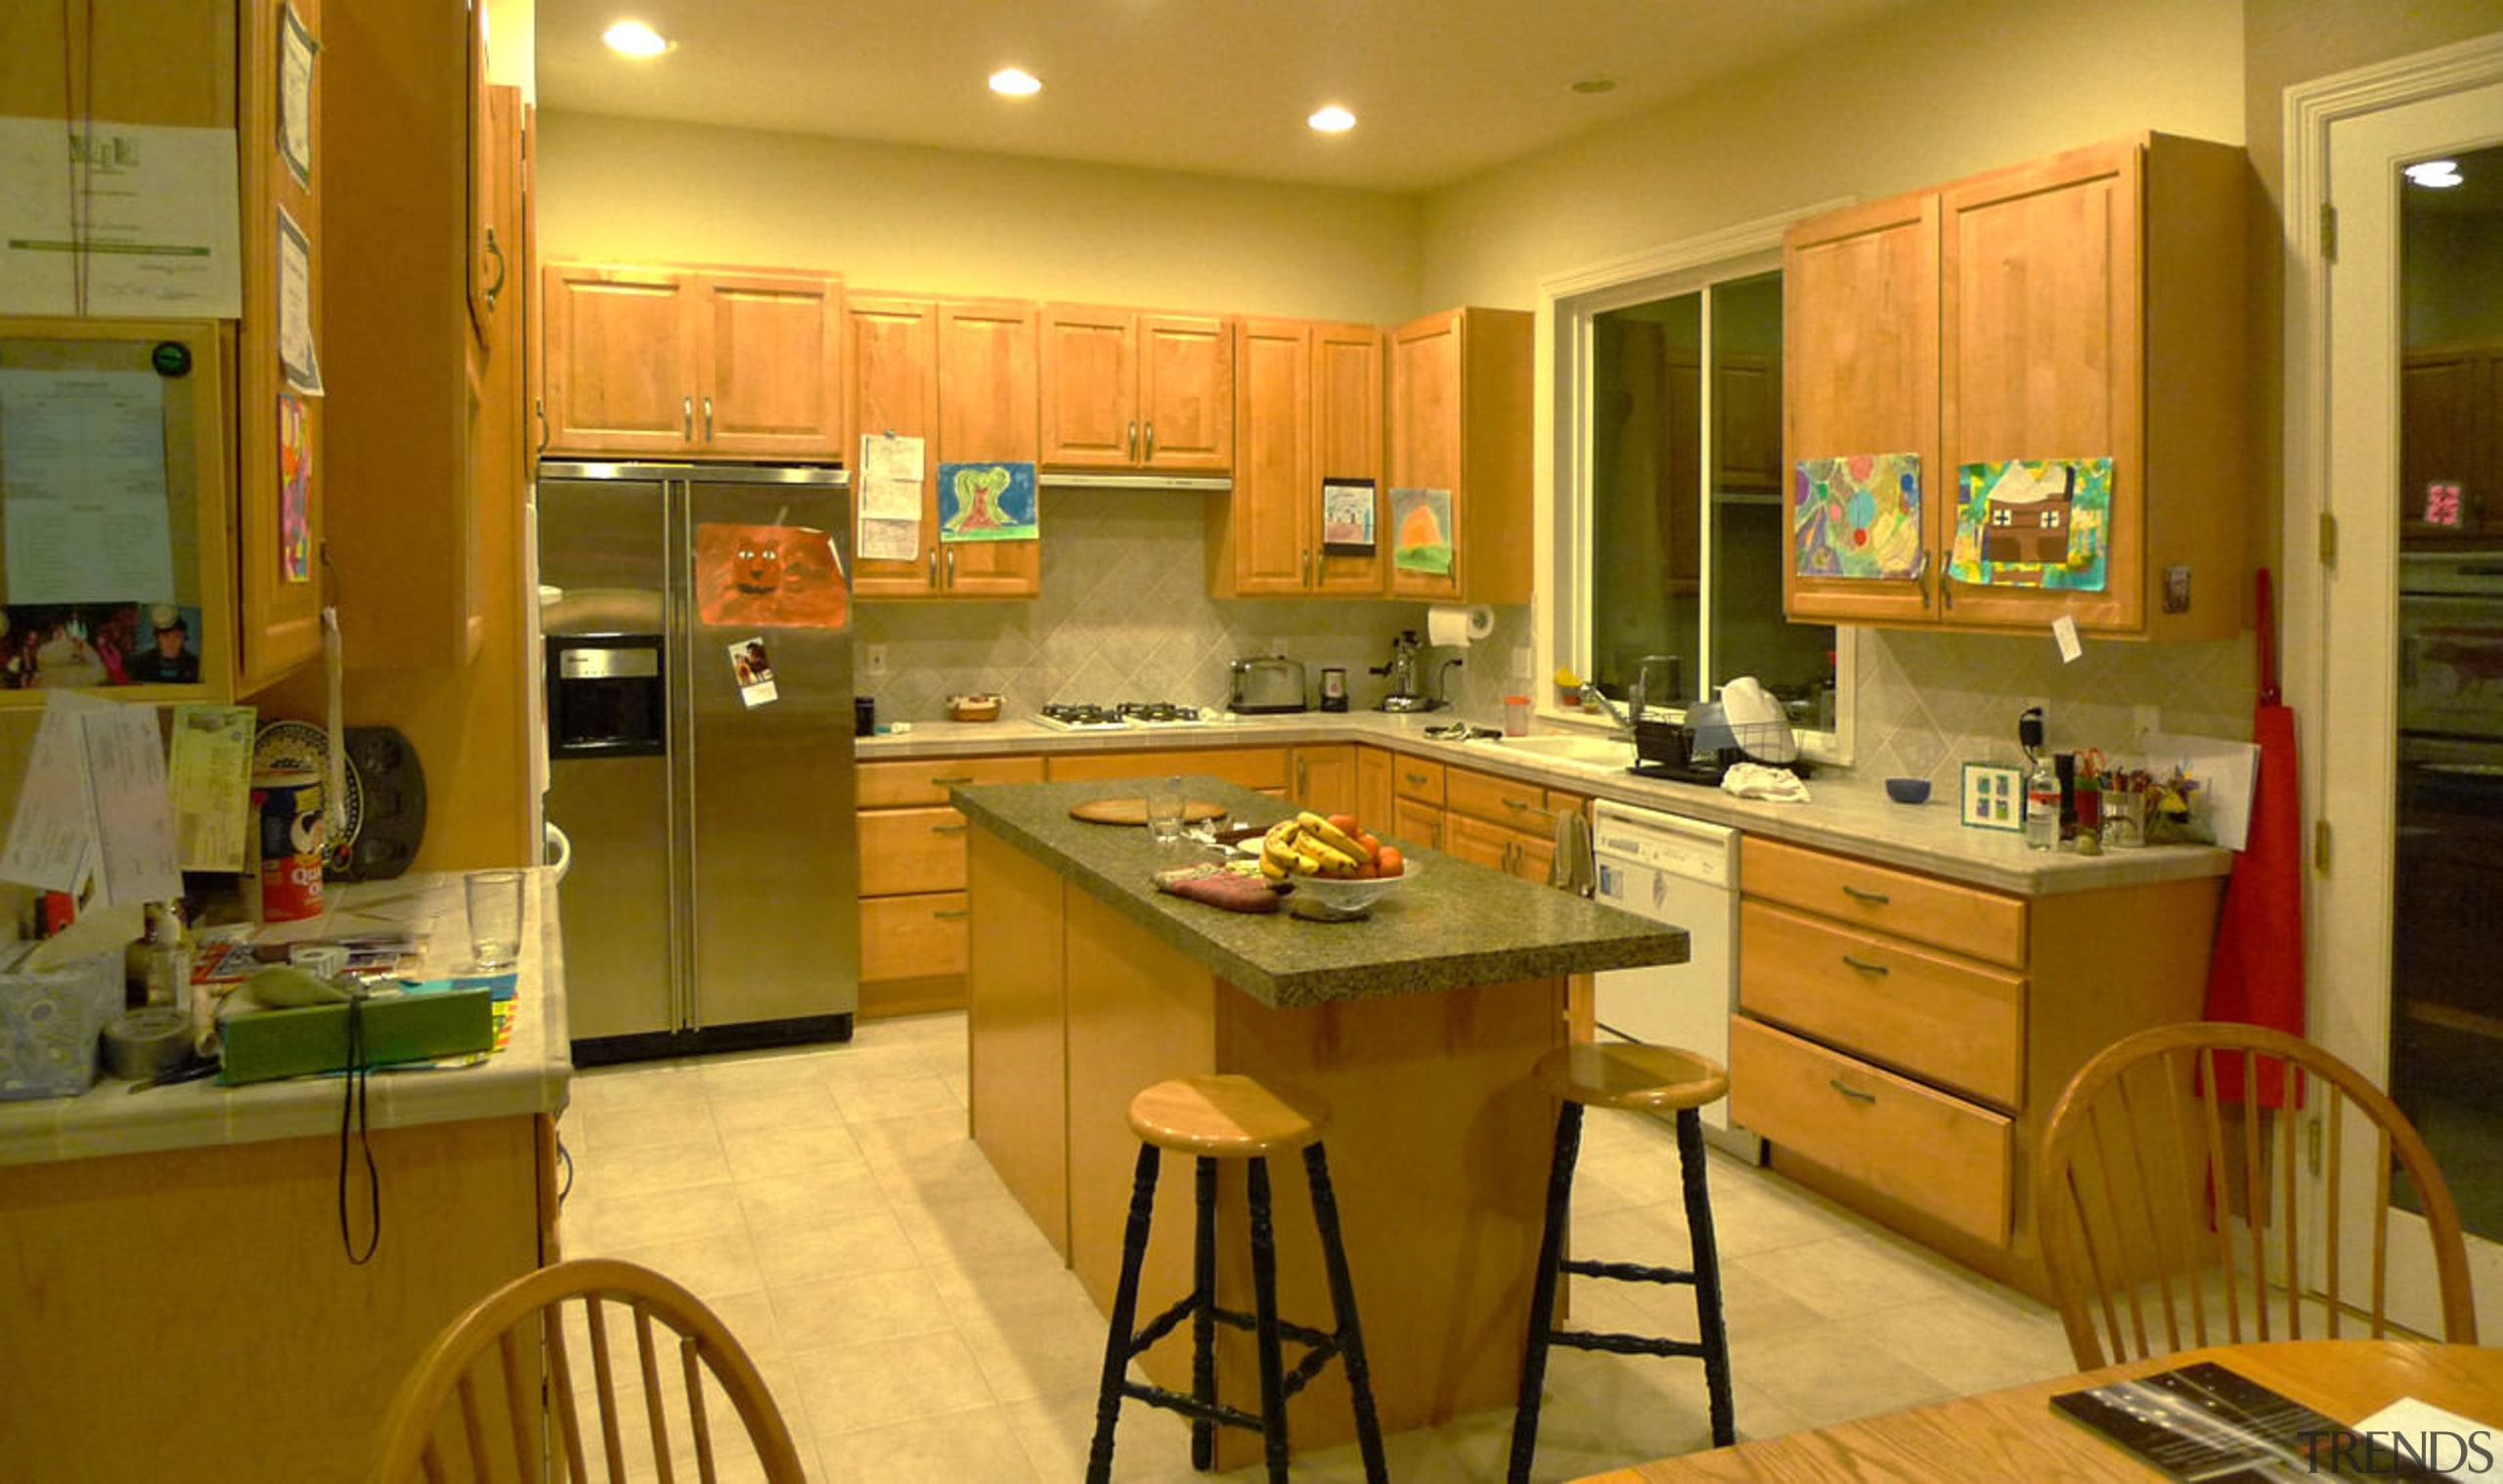 This Richard Landon kitchen has a warm aesthetic cabinetry, countertop, interior design, kitchen, room, brown, orange